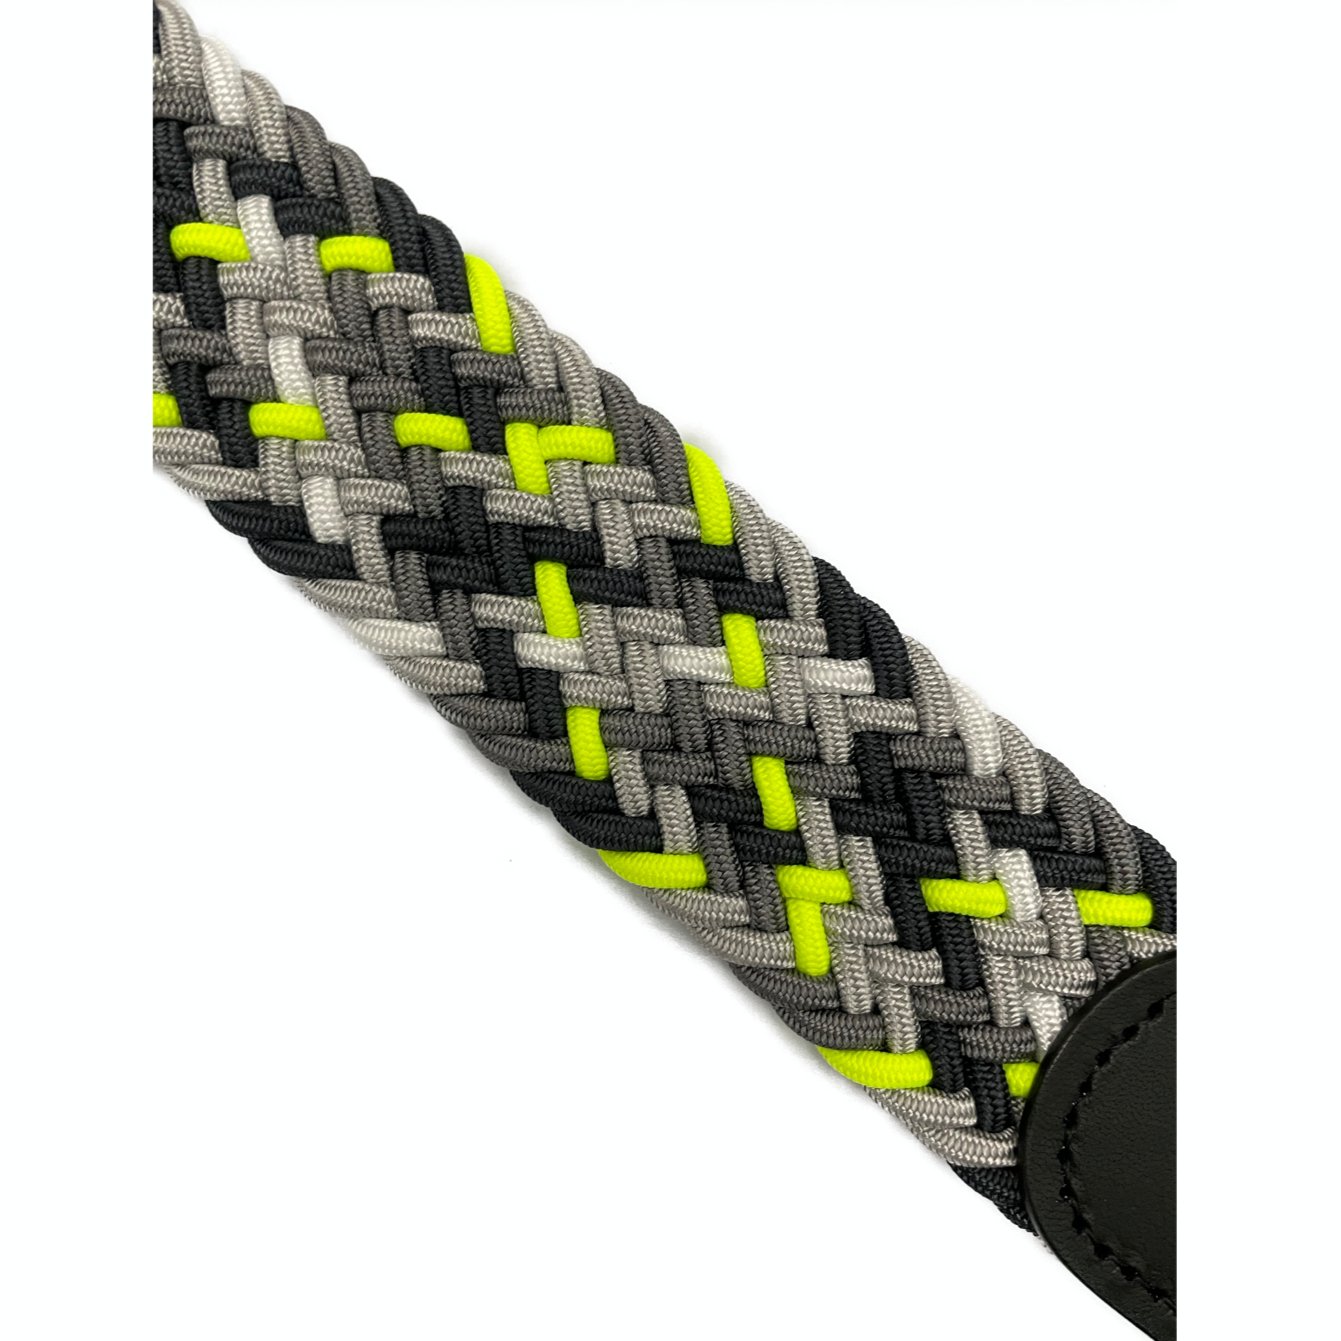 Cintura elasticizzata multicolor nera grigia giallo fluorescente rifinita nera Monsieur - MONSIEUR